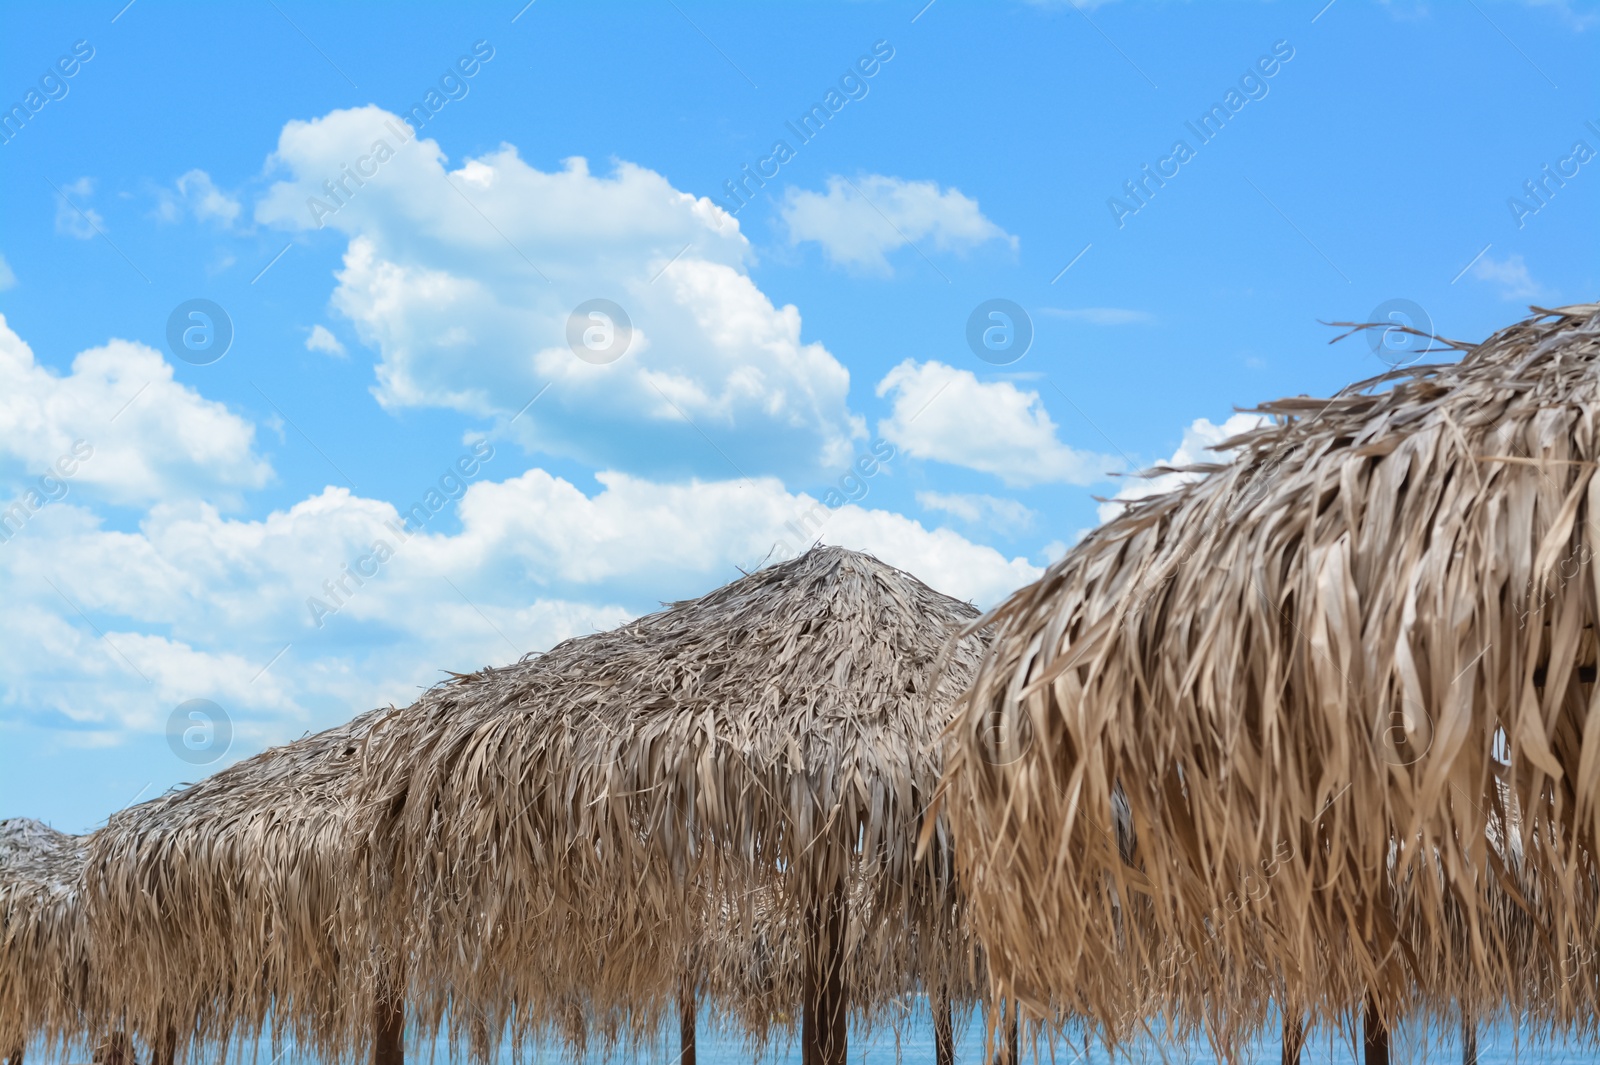 Photo of Beautiful straw beach umbrellas against blue sky